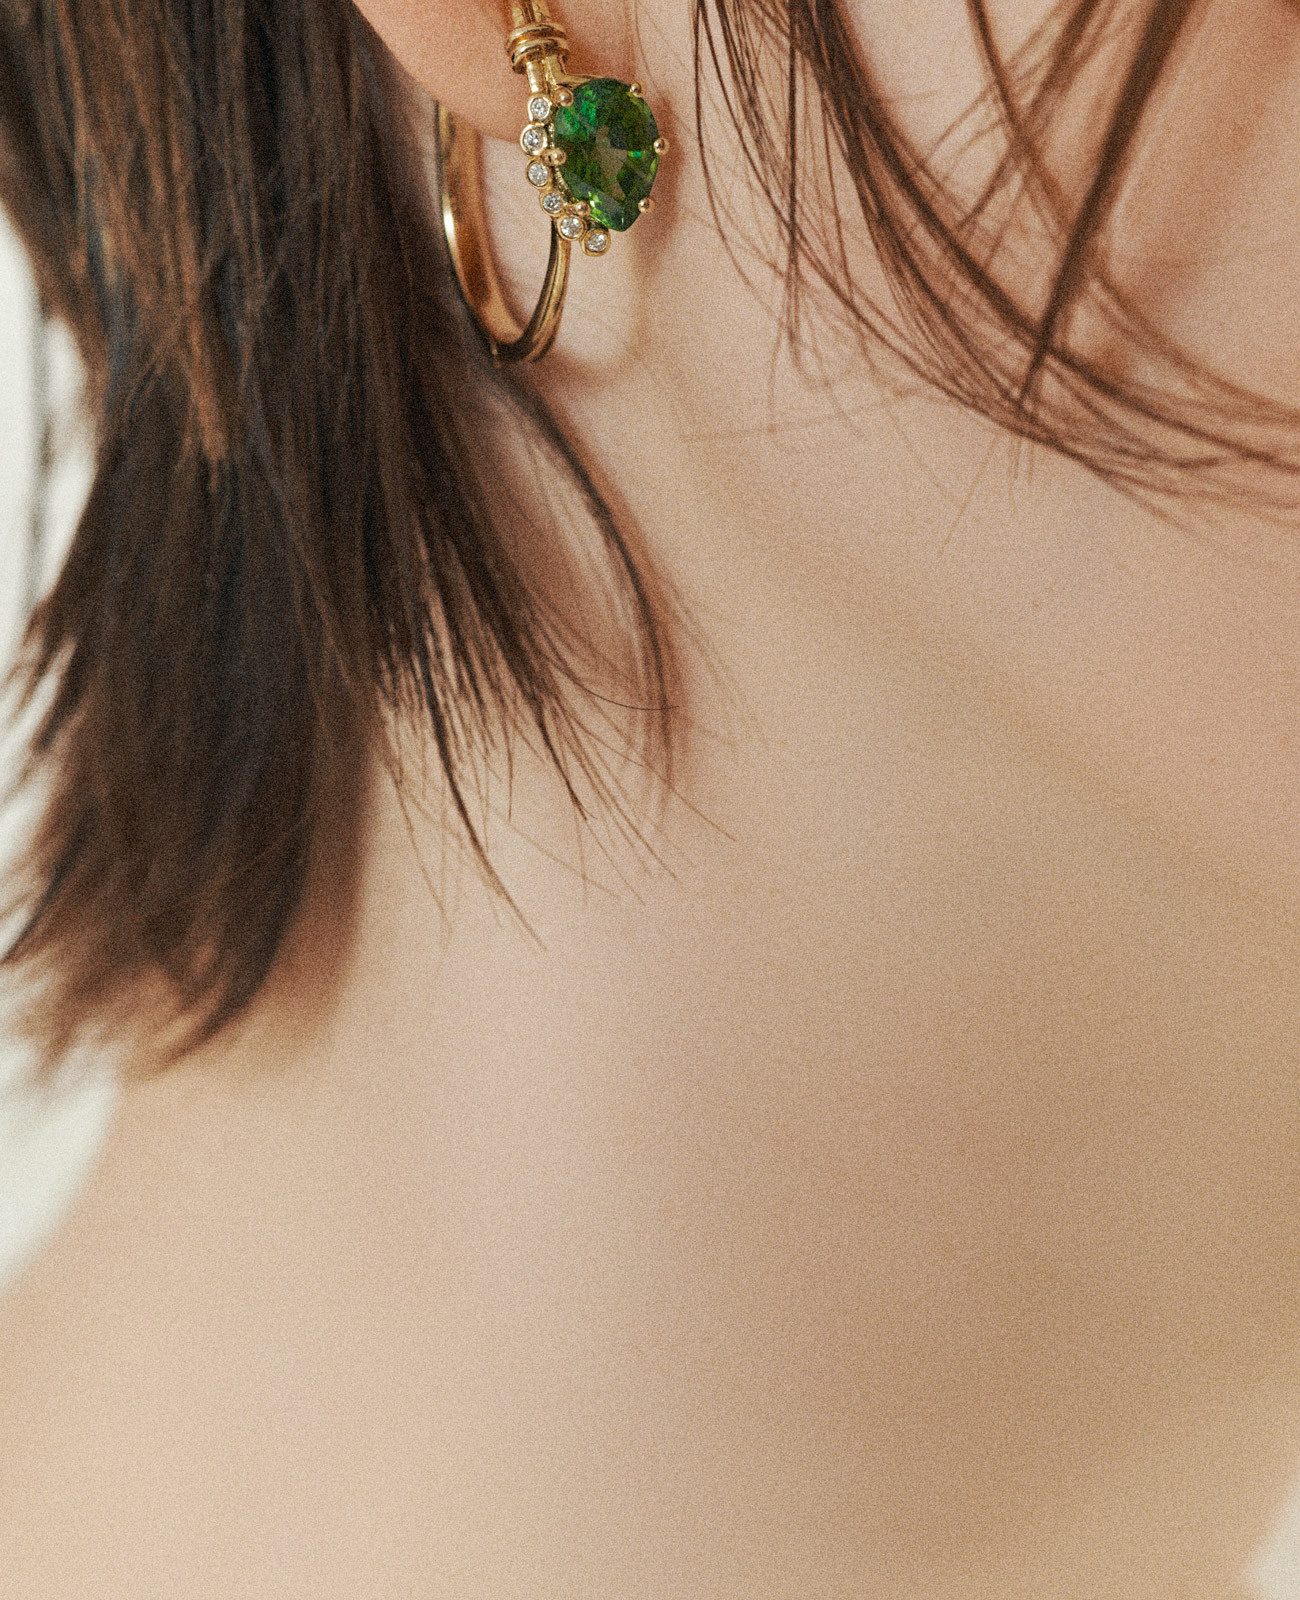 SUN N°1 GREEN TOURMALINE earring pascale monvoisin jewelry paris